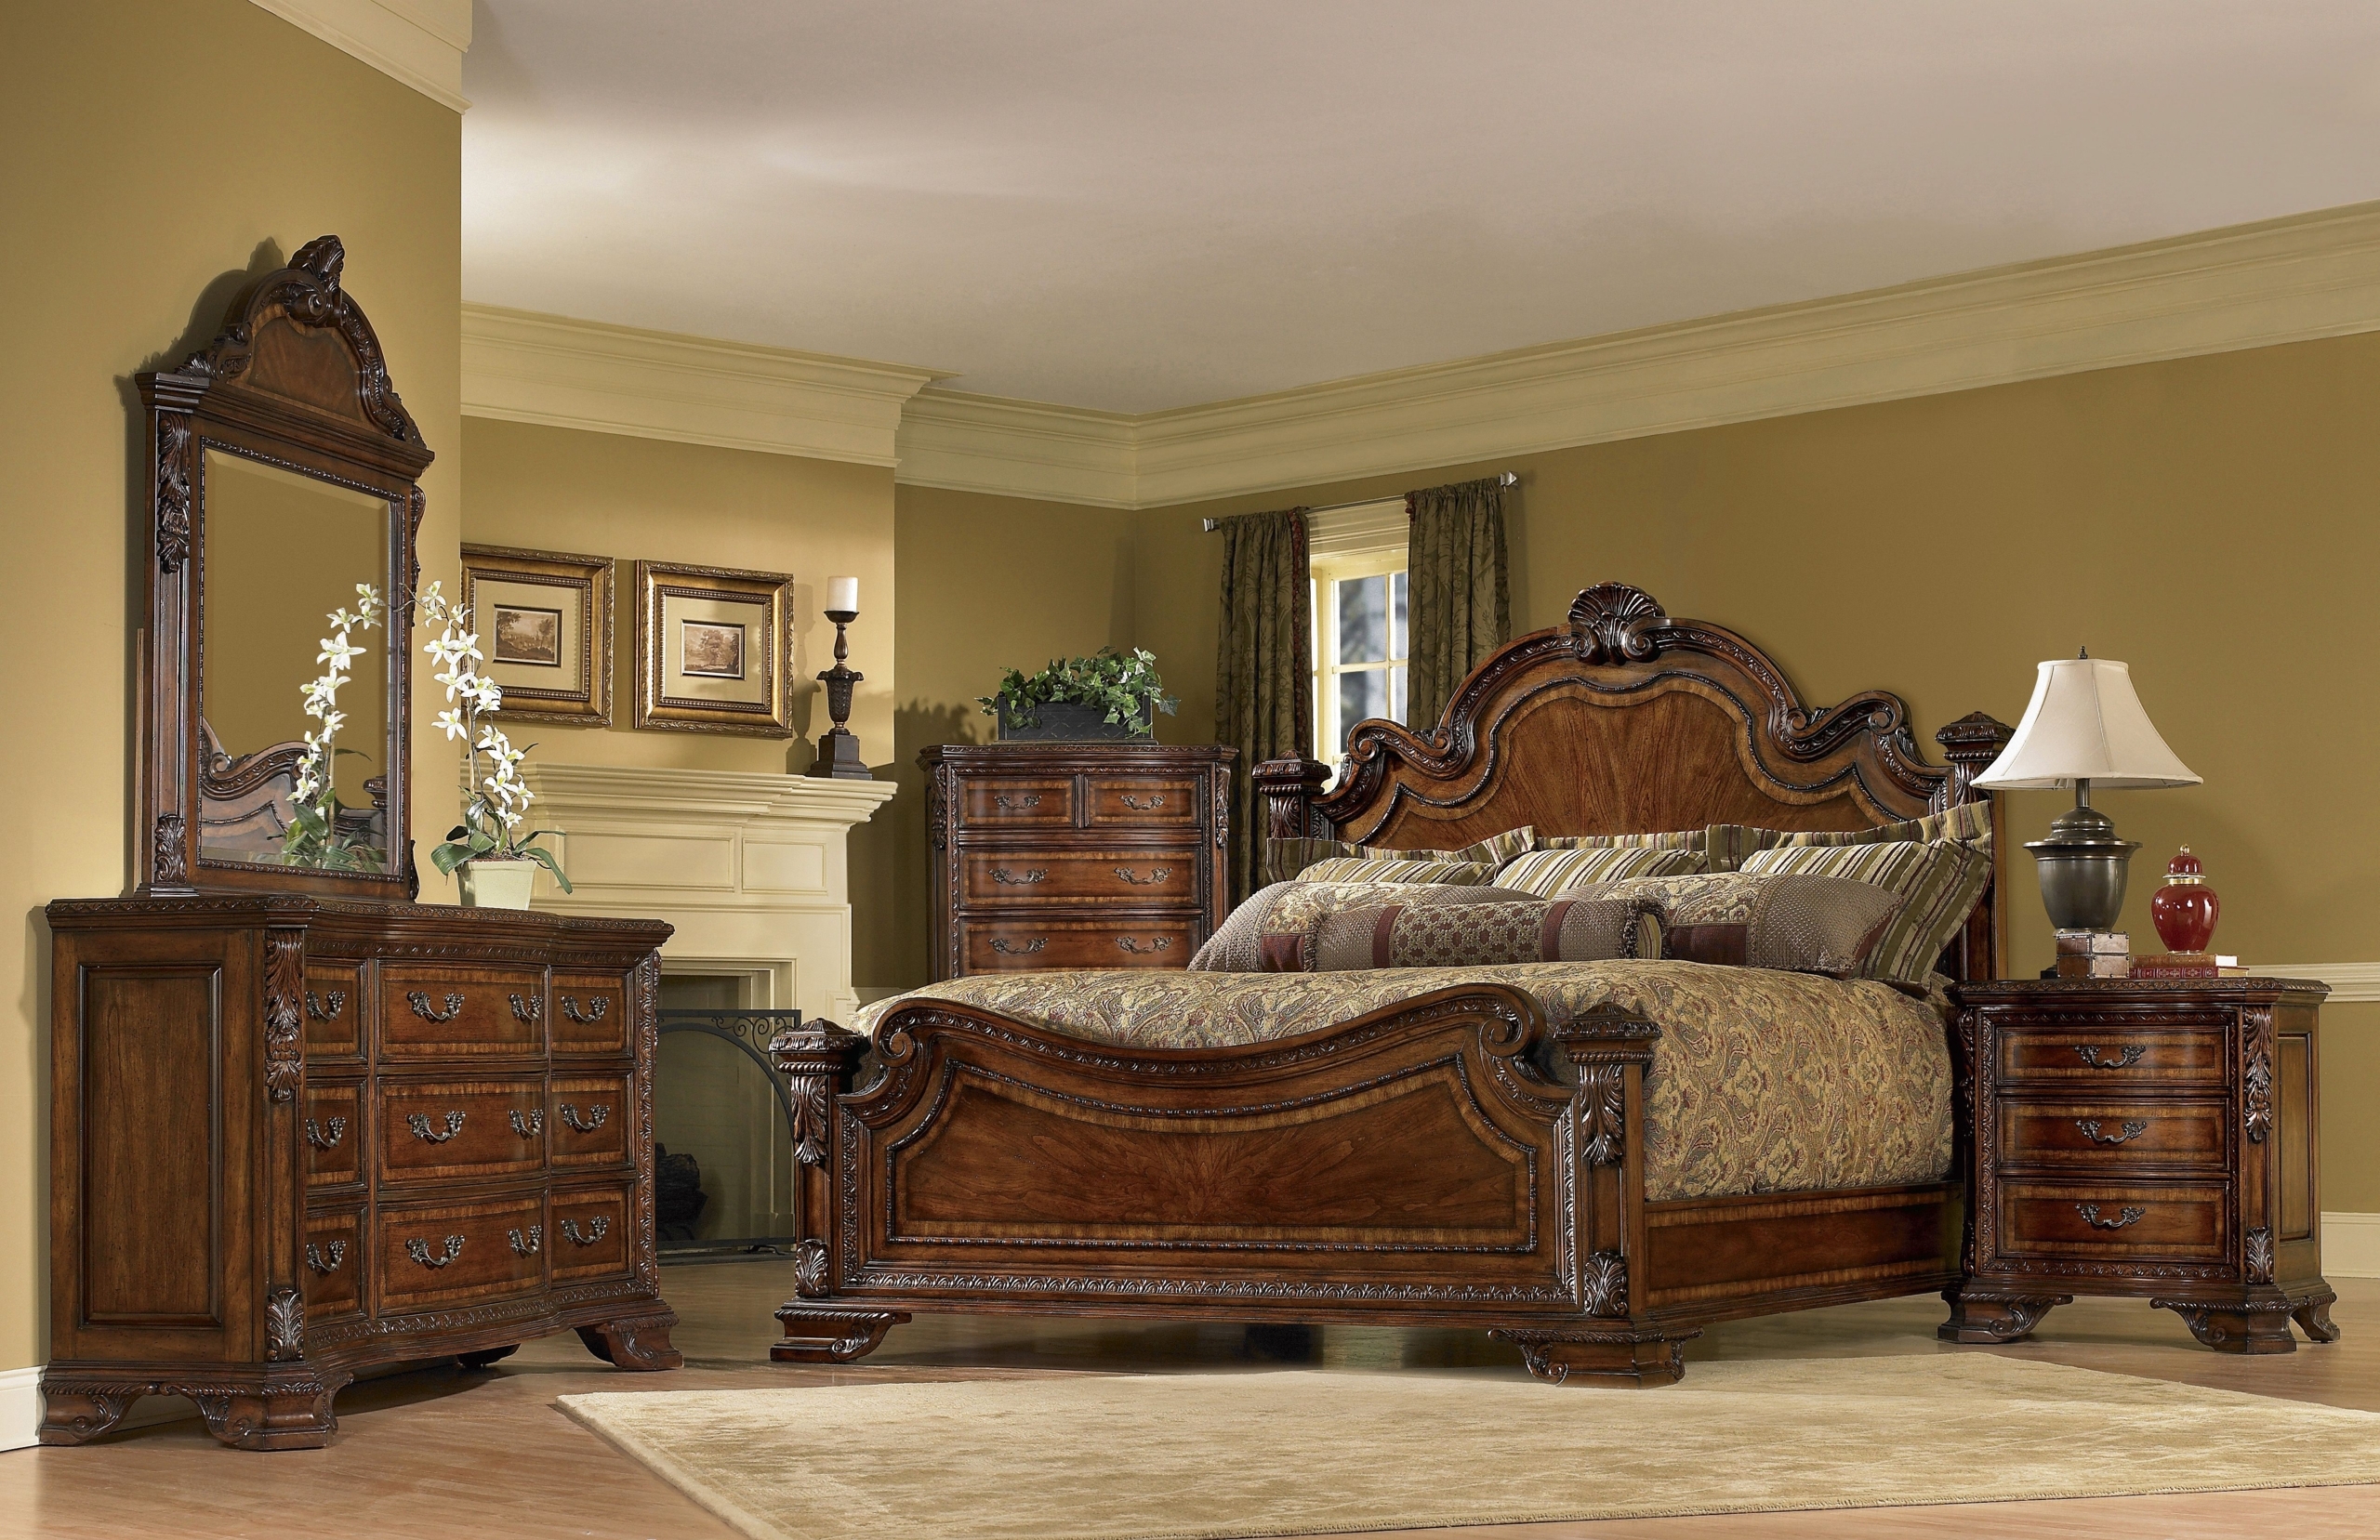 old world bedroom luxury bedroom furniture